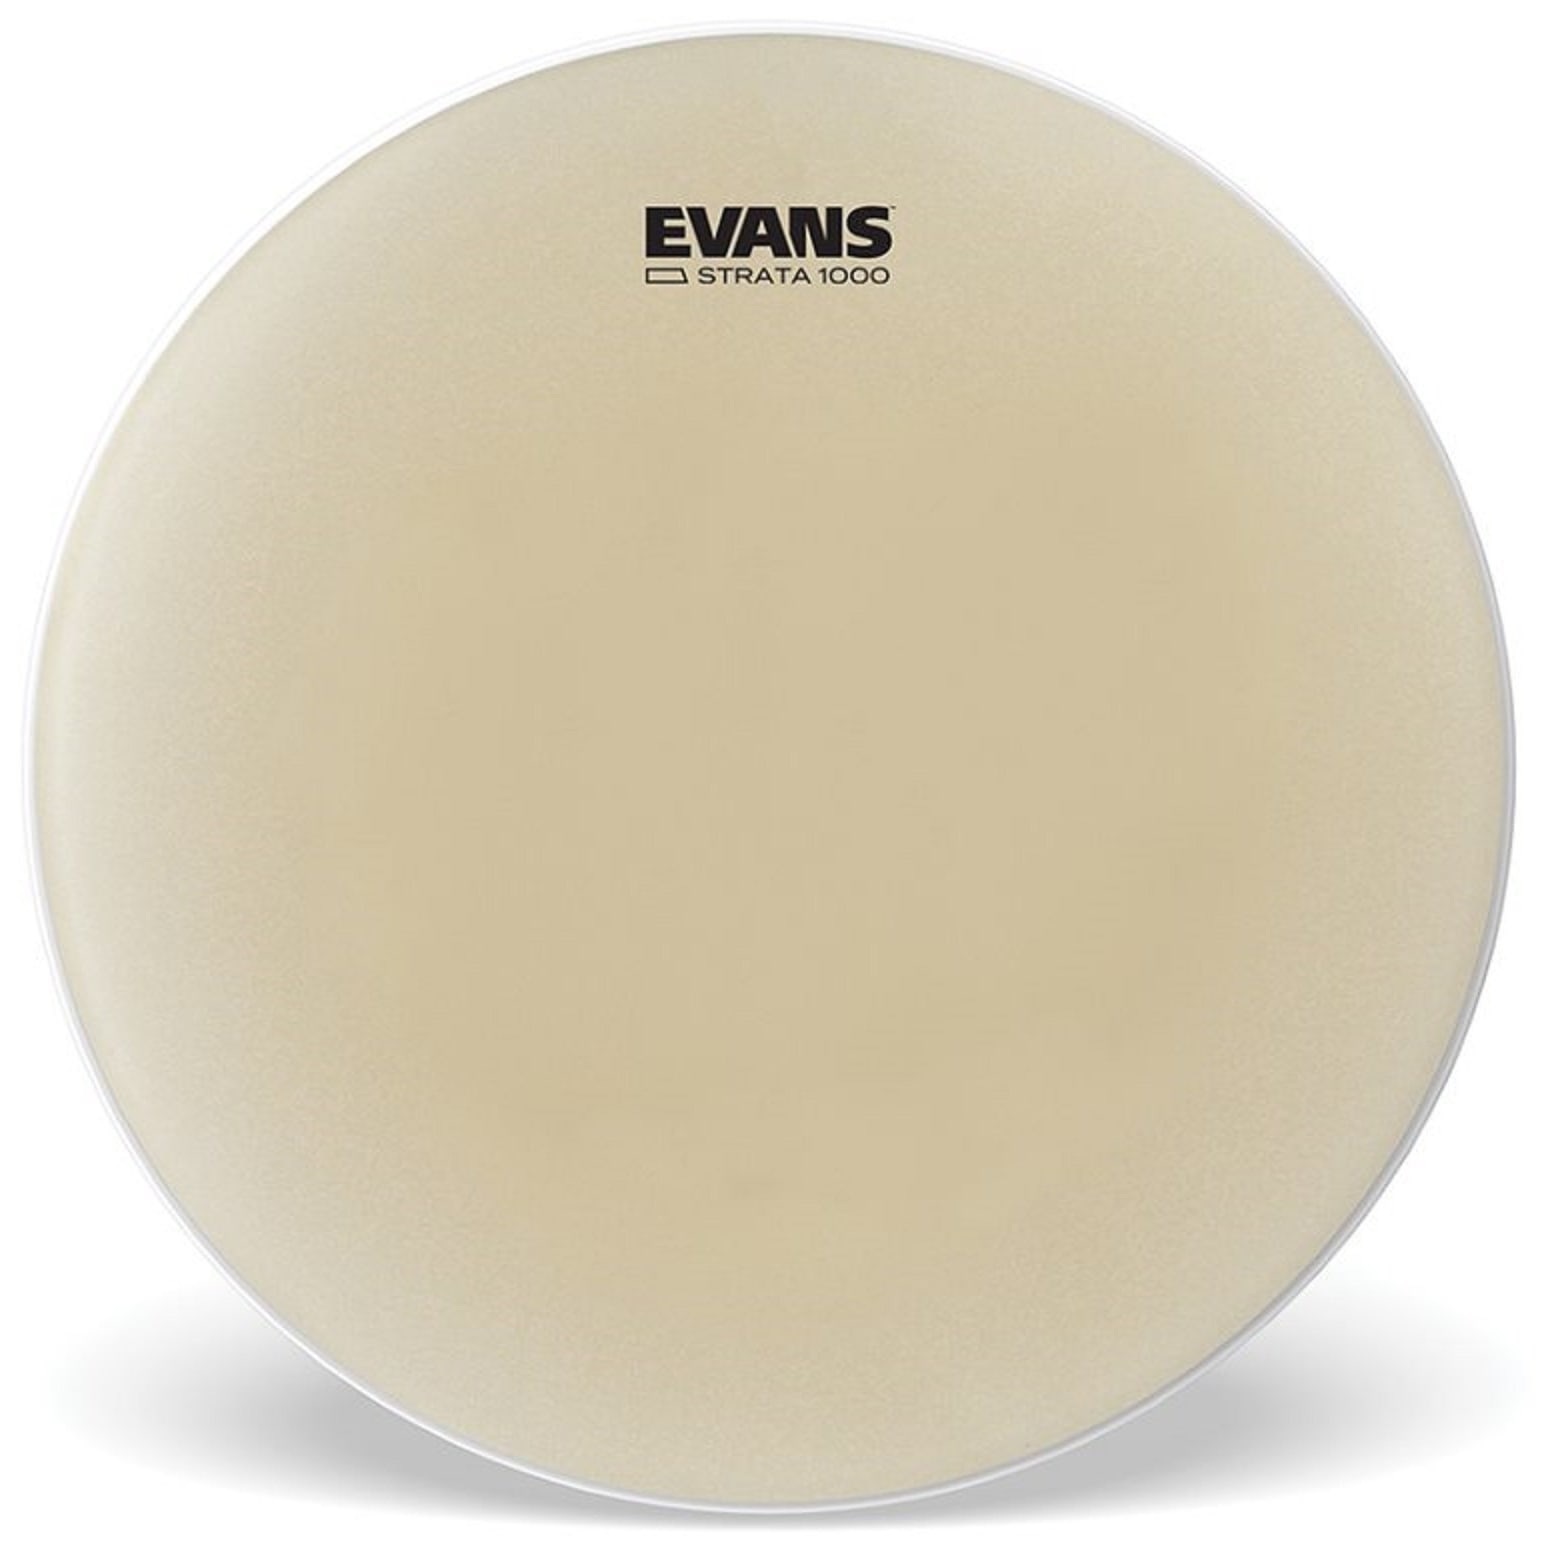 Evans CT08S - Strata 1000 Concert Drum Head, 8 Zoll